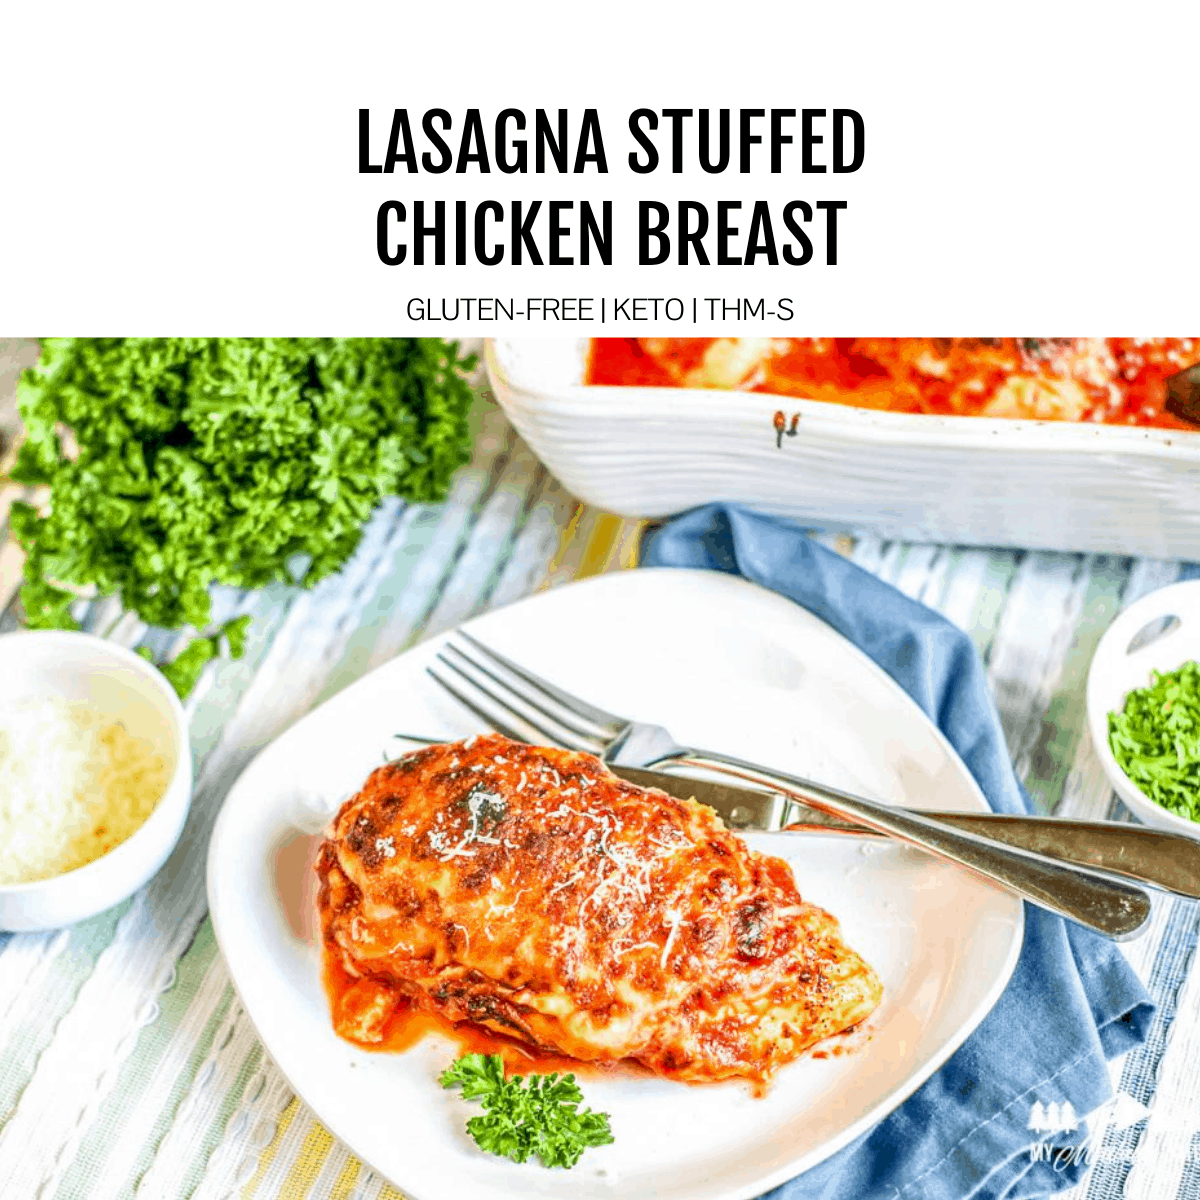 lasagna stuffed chicken breast featured image